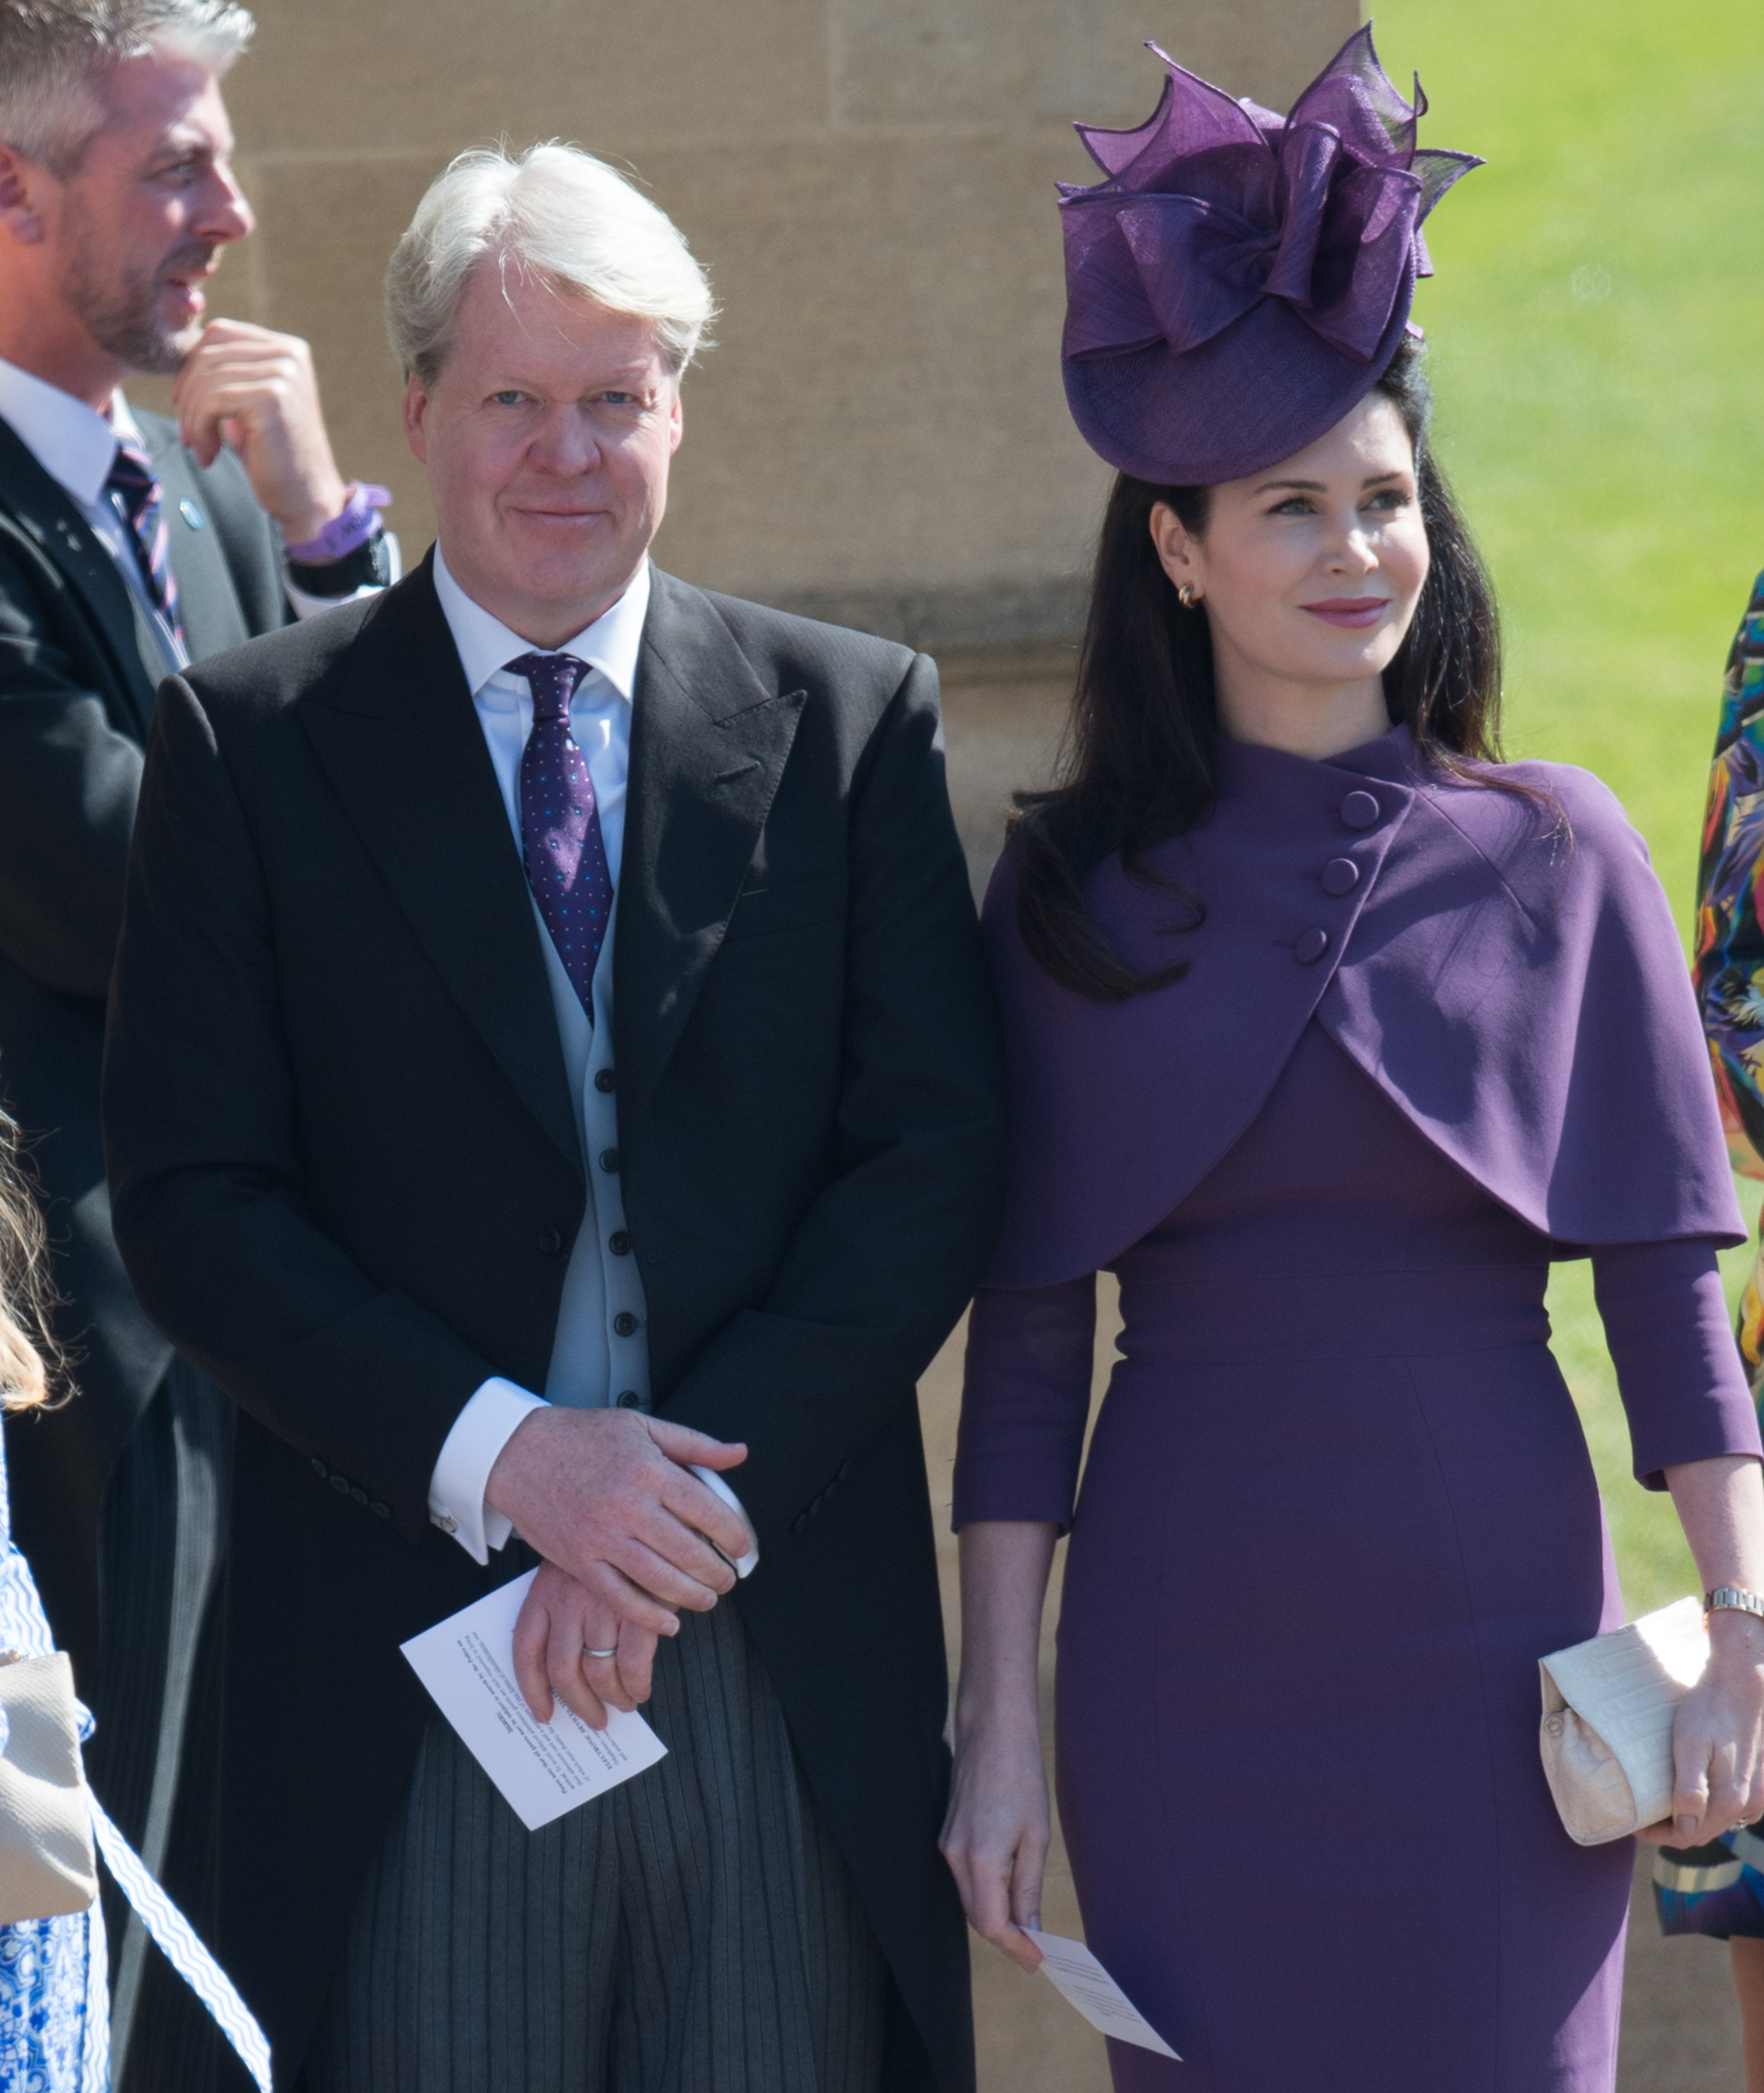 royal wedding hat Karen spencer